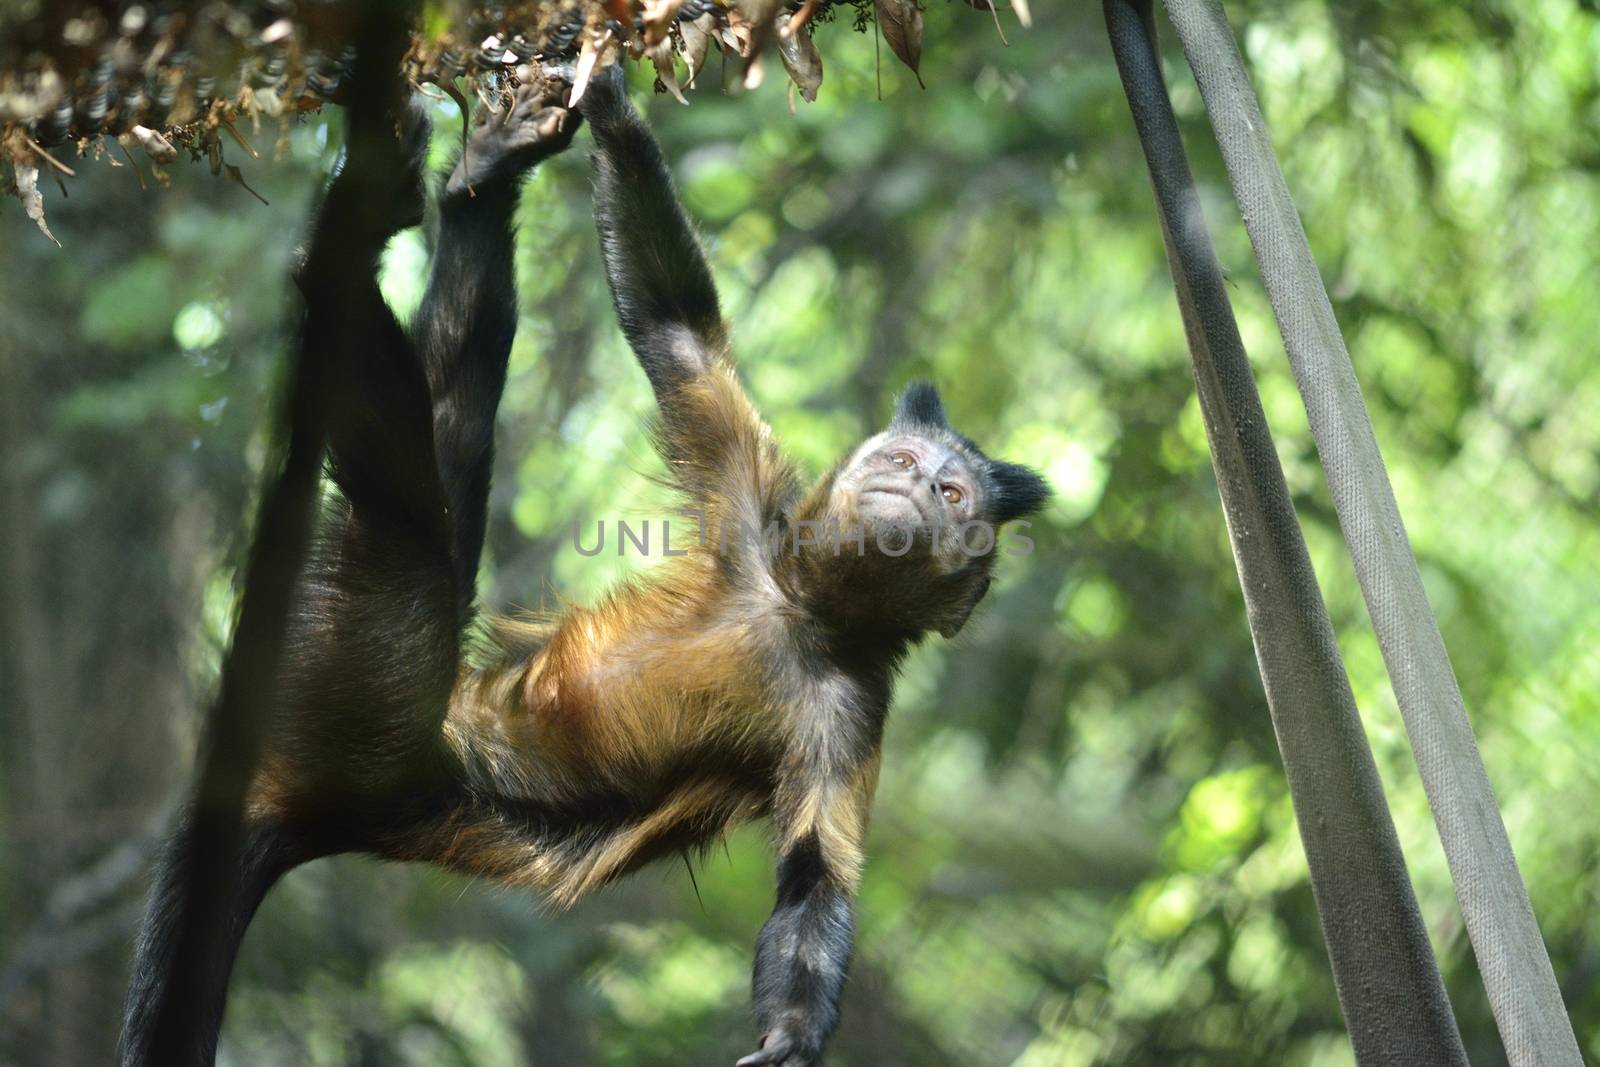 A tufted capuchin monkey, Cebus apella, climbing